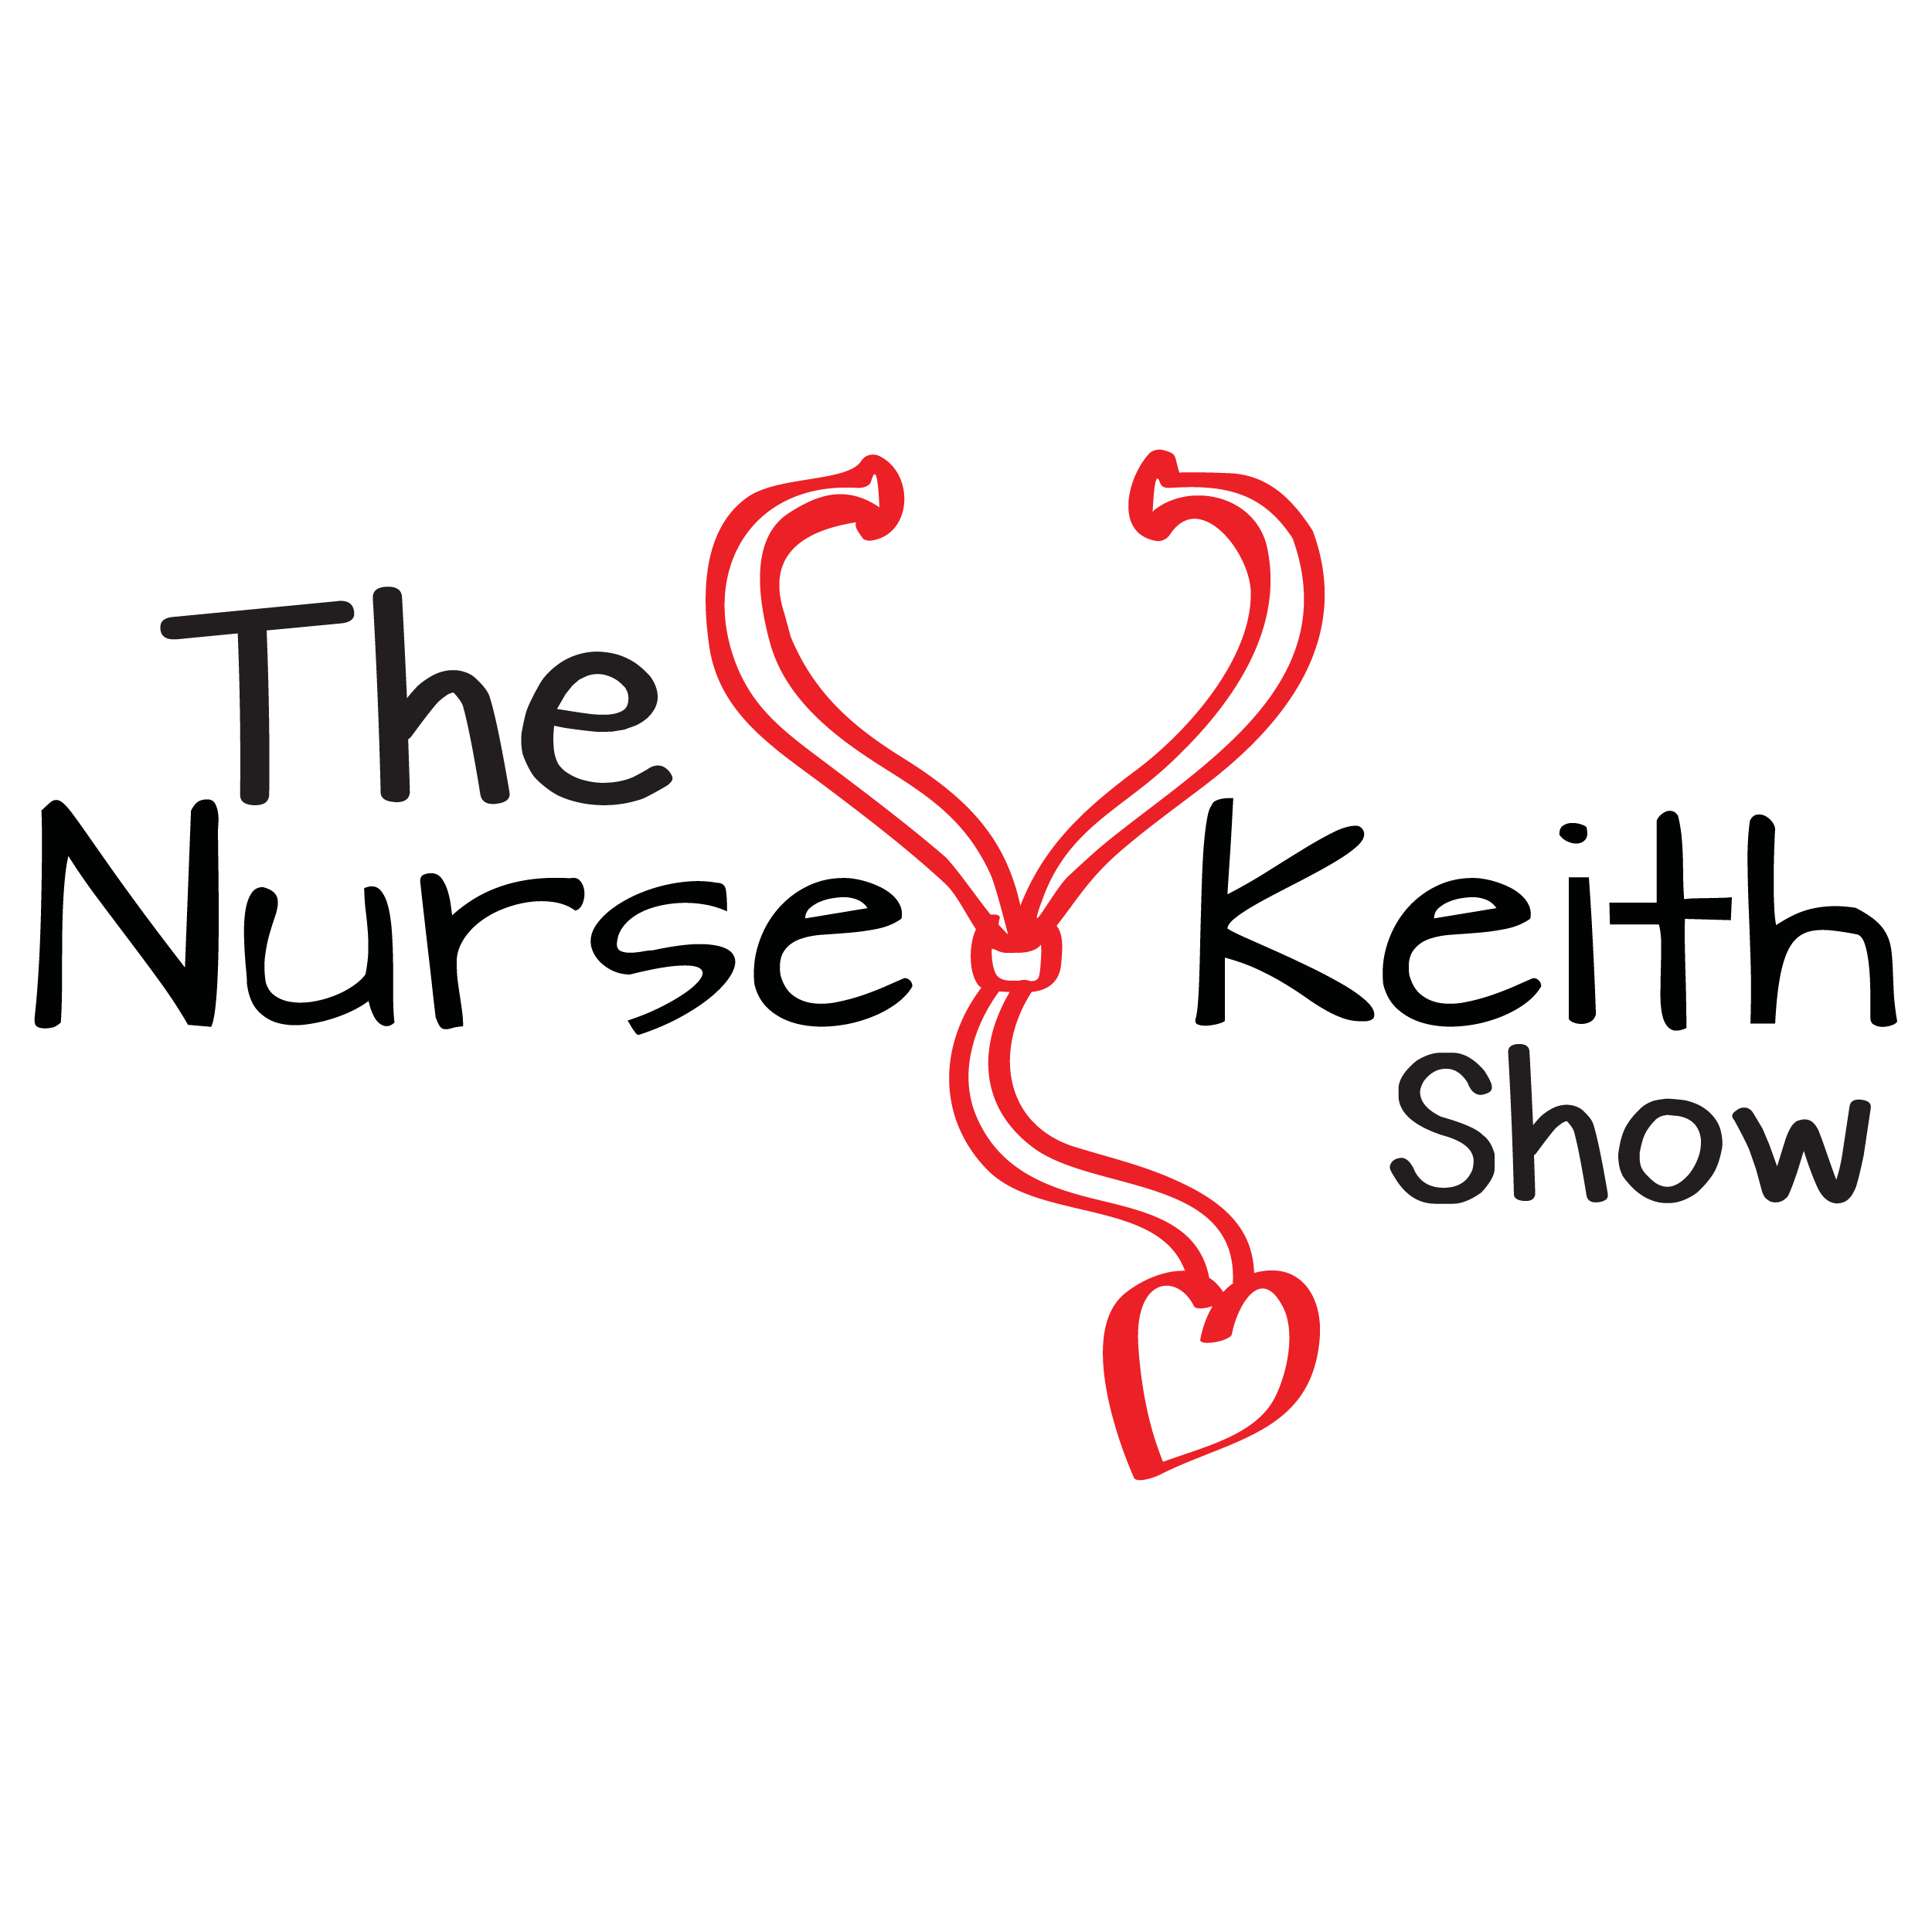 Celebrating Nurses Week 2017, The Nurse Keith Show, EPS 107